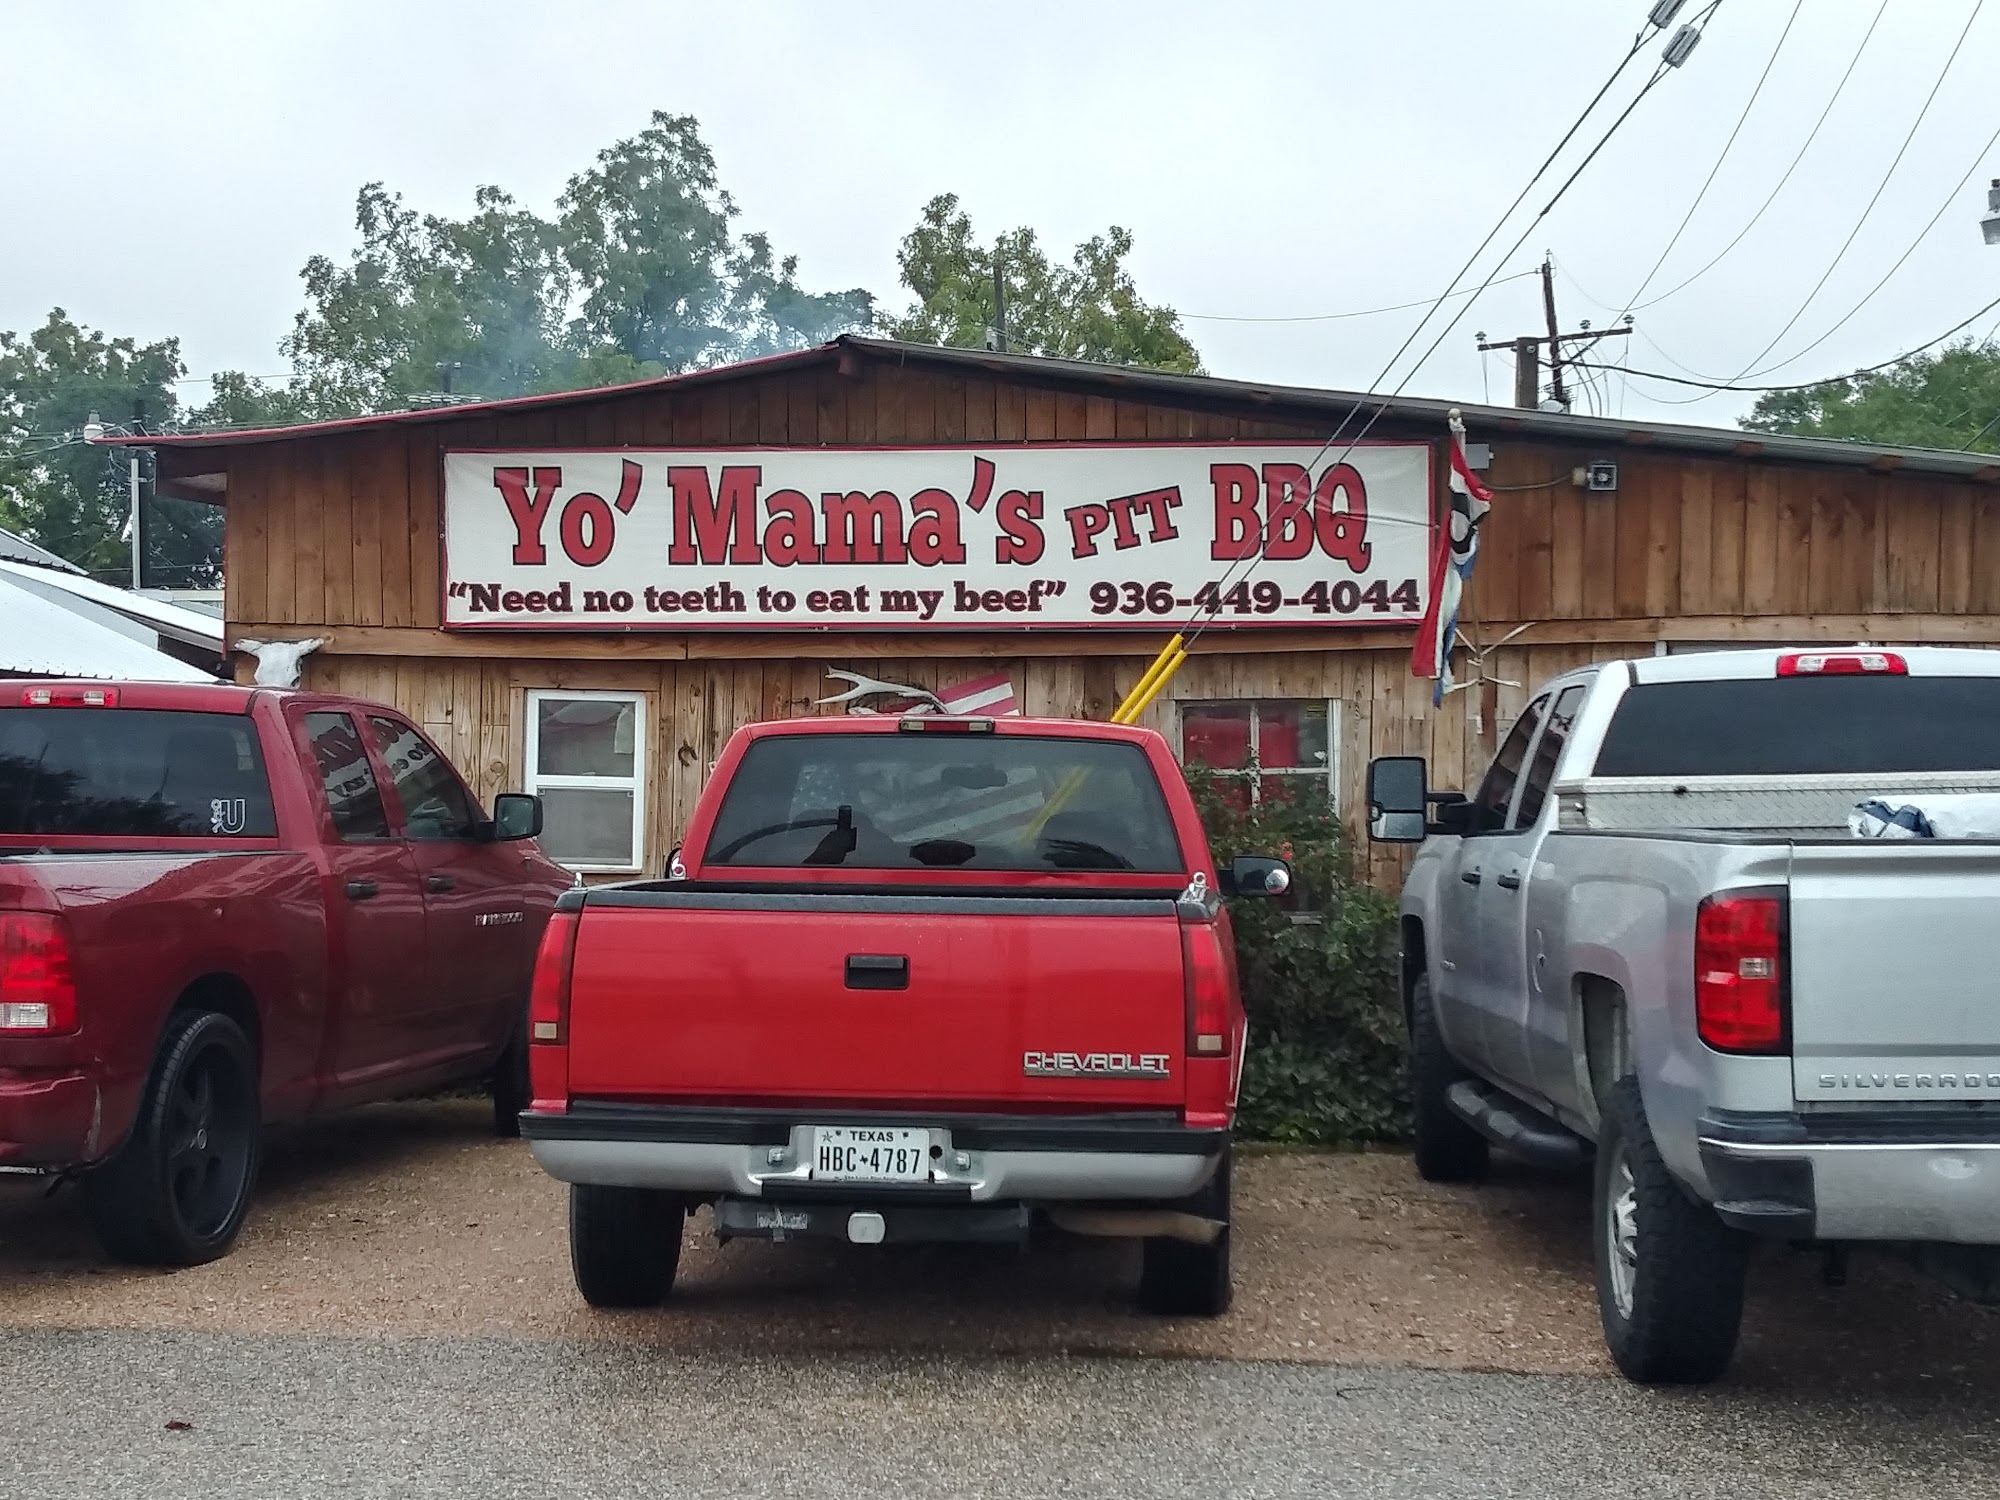 Yo' Mama's Pit Bar-B-Que